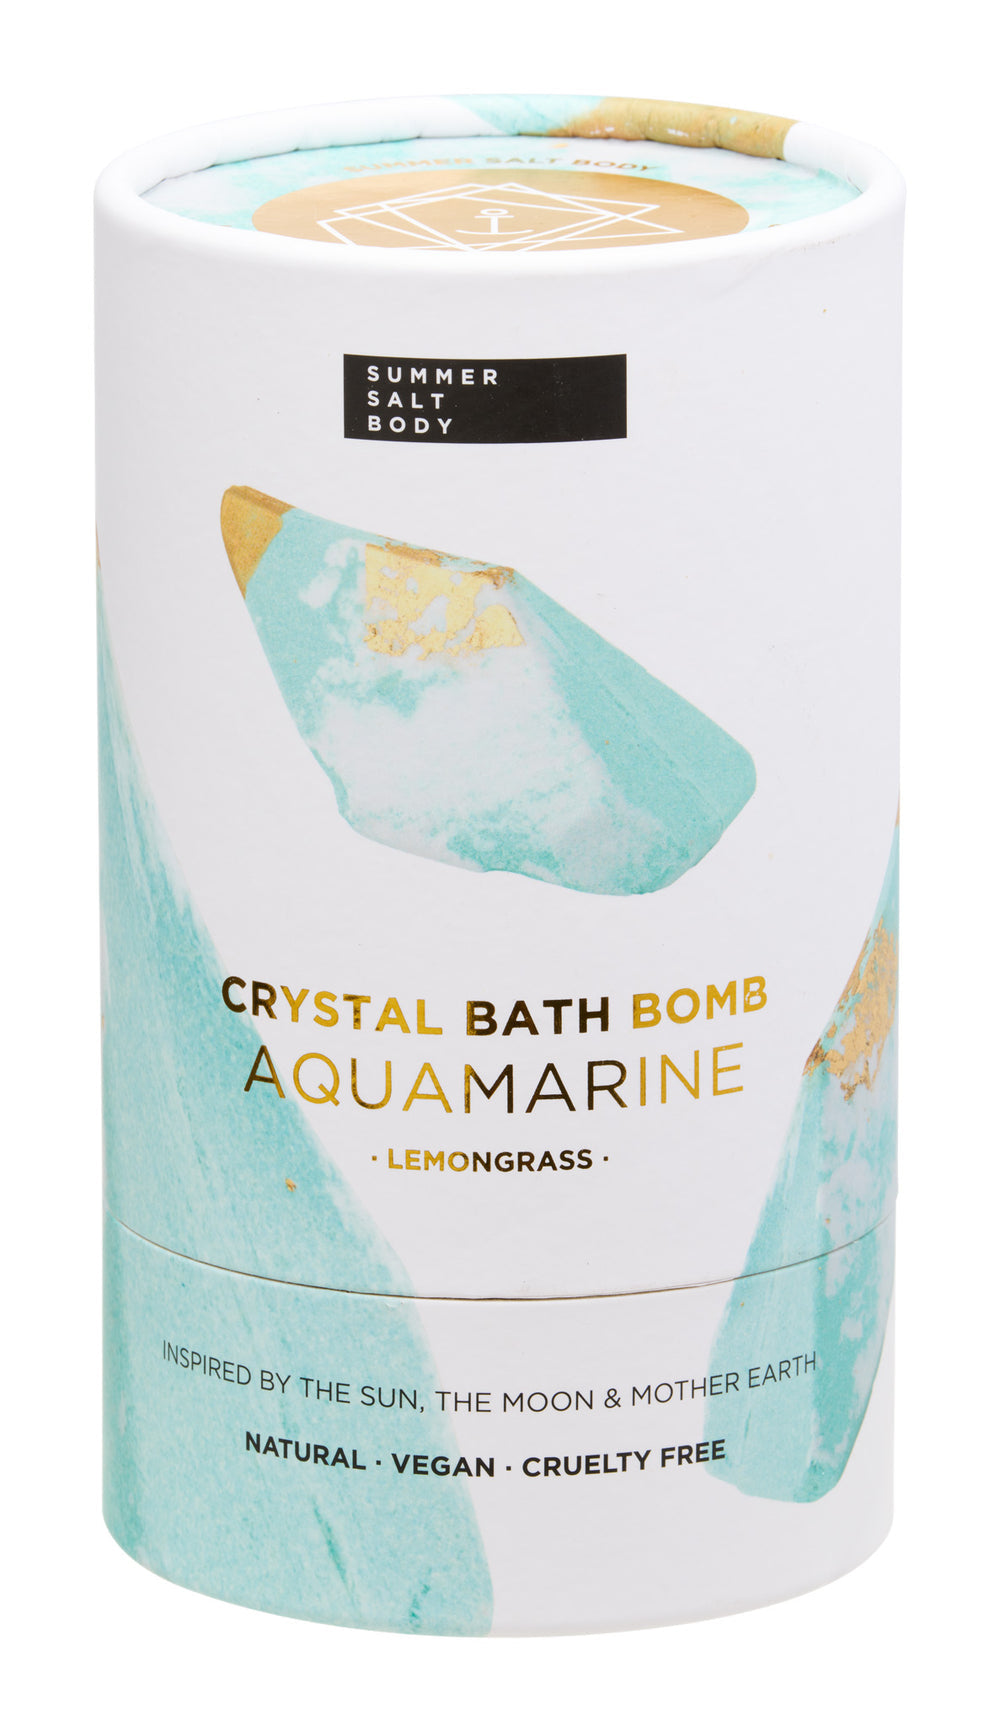 Summer Salt Body Crystal Bath Bomb Amethyst Lemongrass 110g